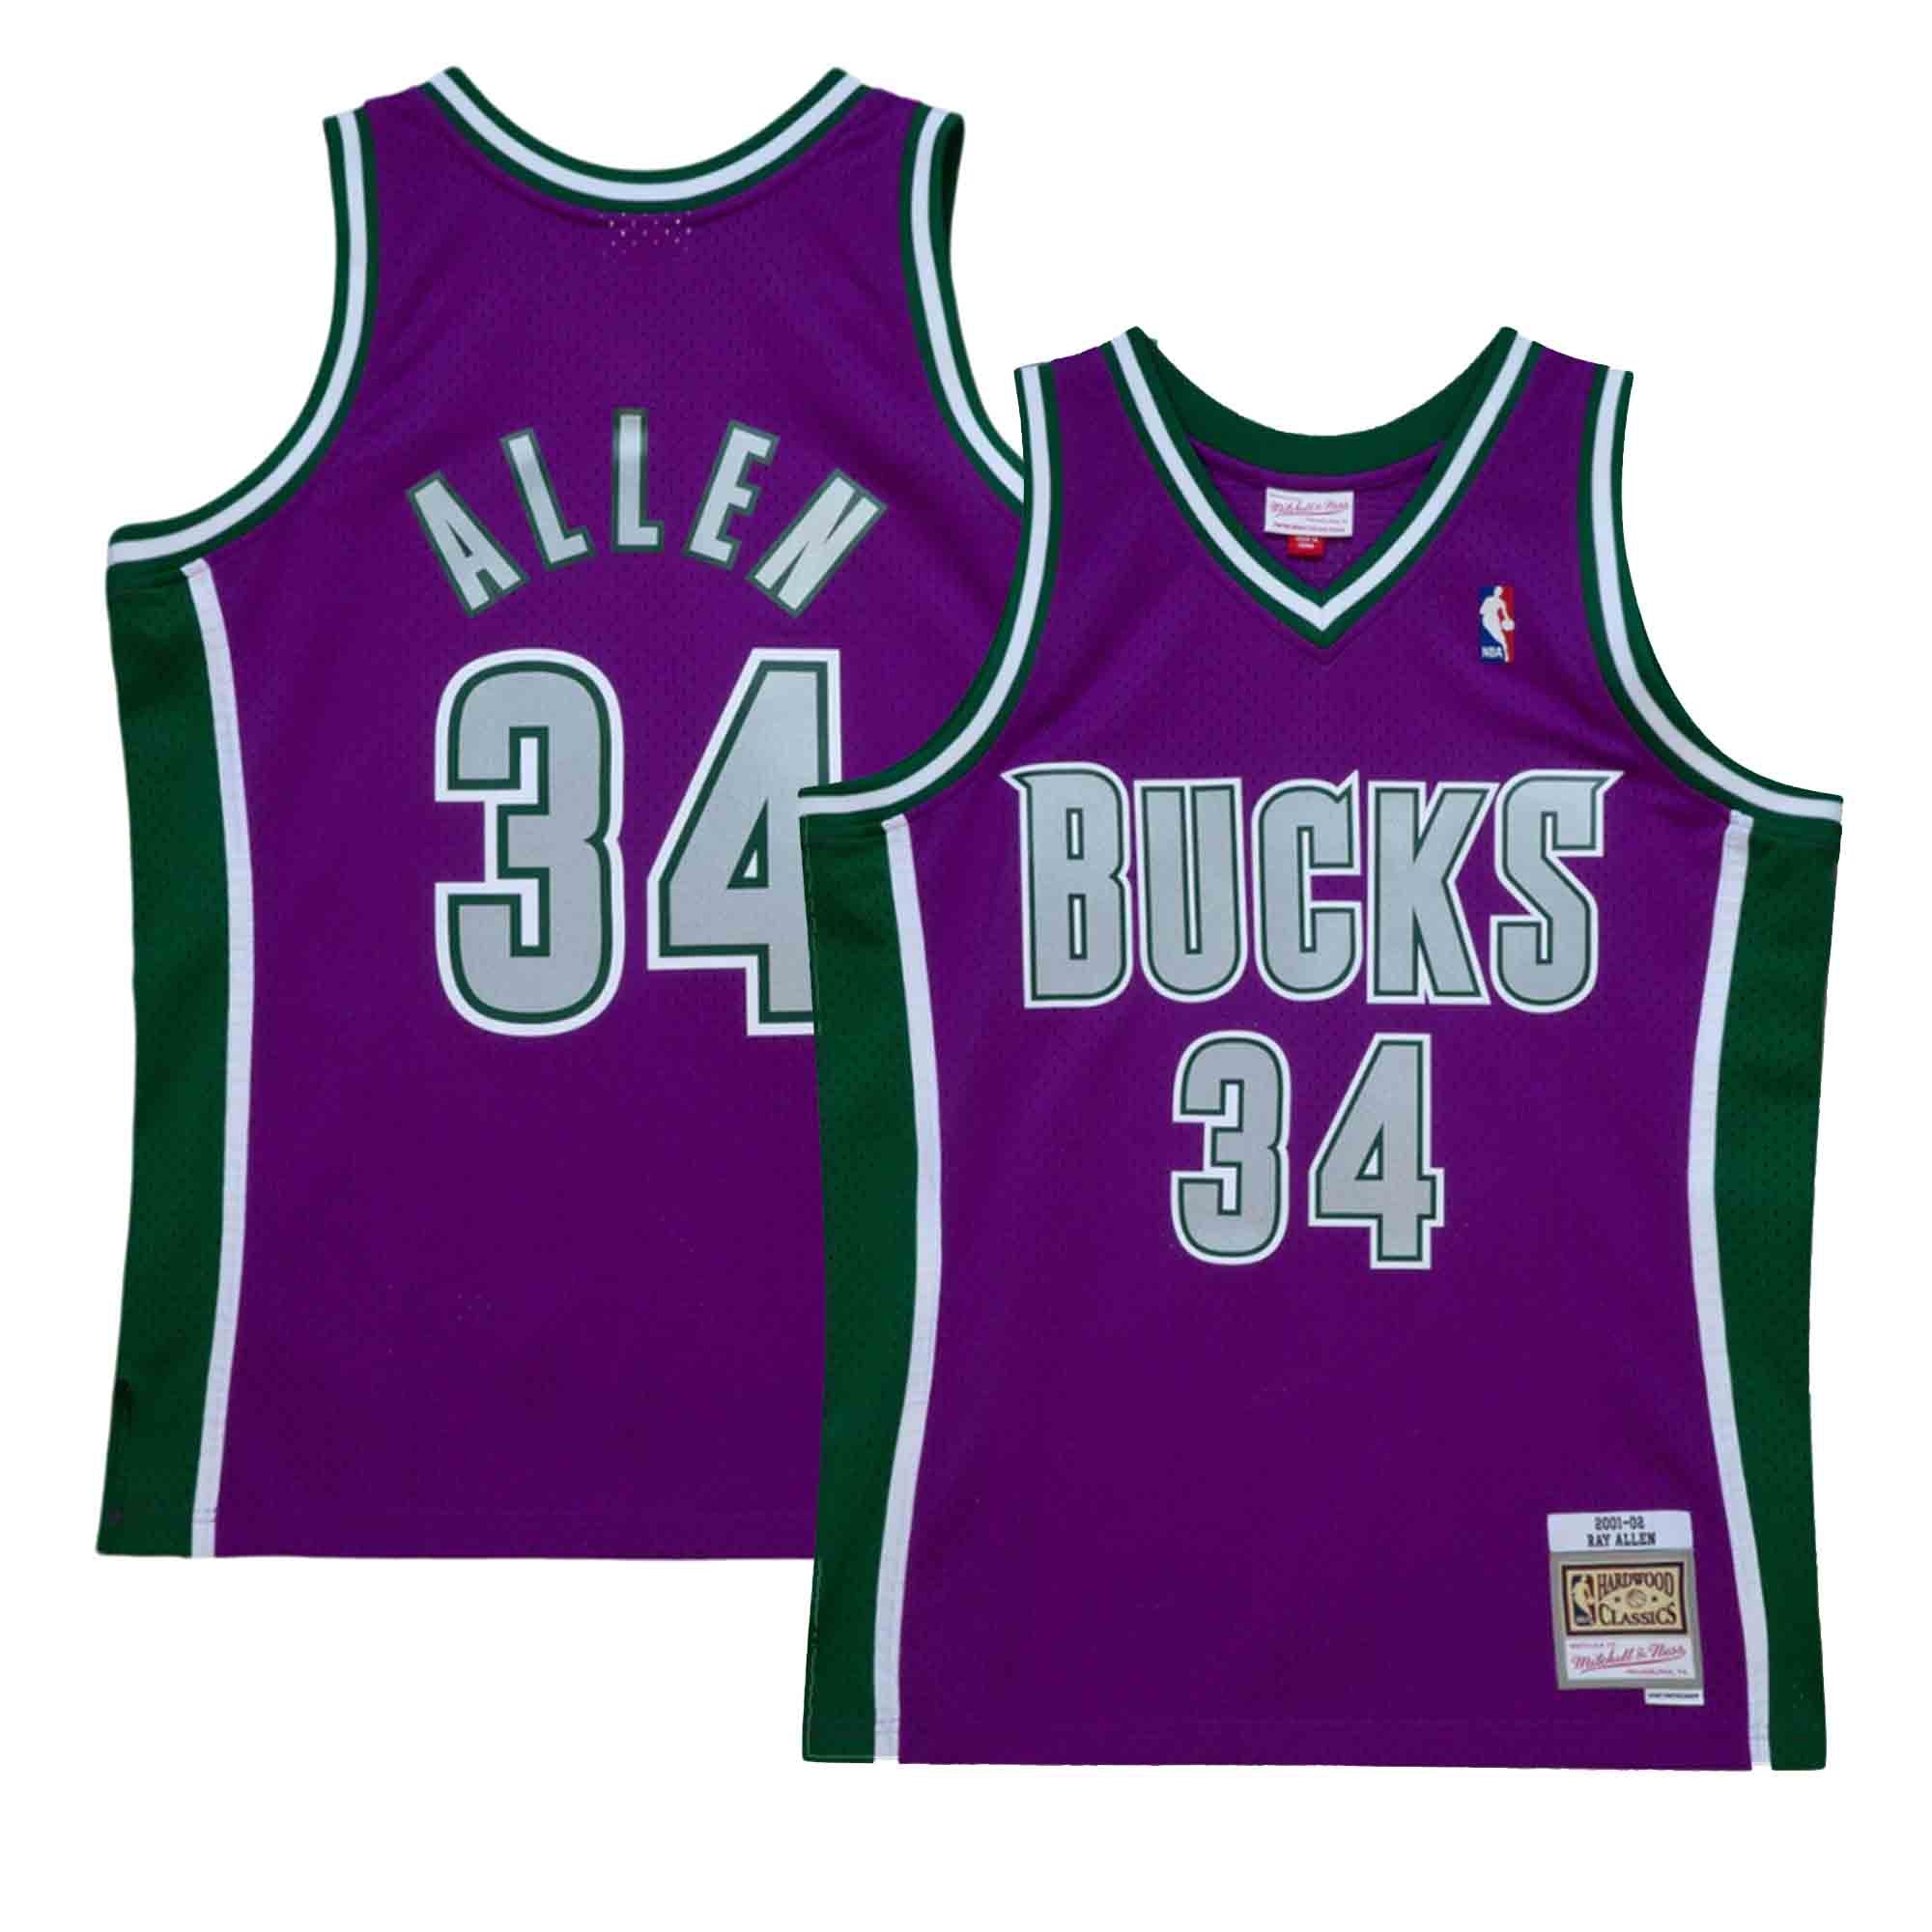 Swingman Jersey Milwaukee Bucks Alternate 1996-97 Ray Allen - Shop